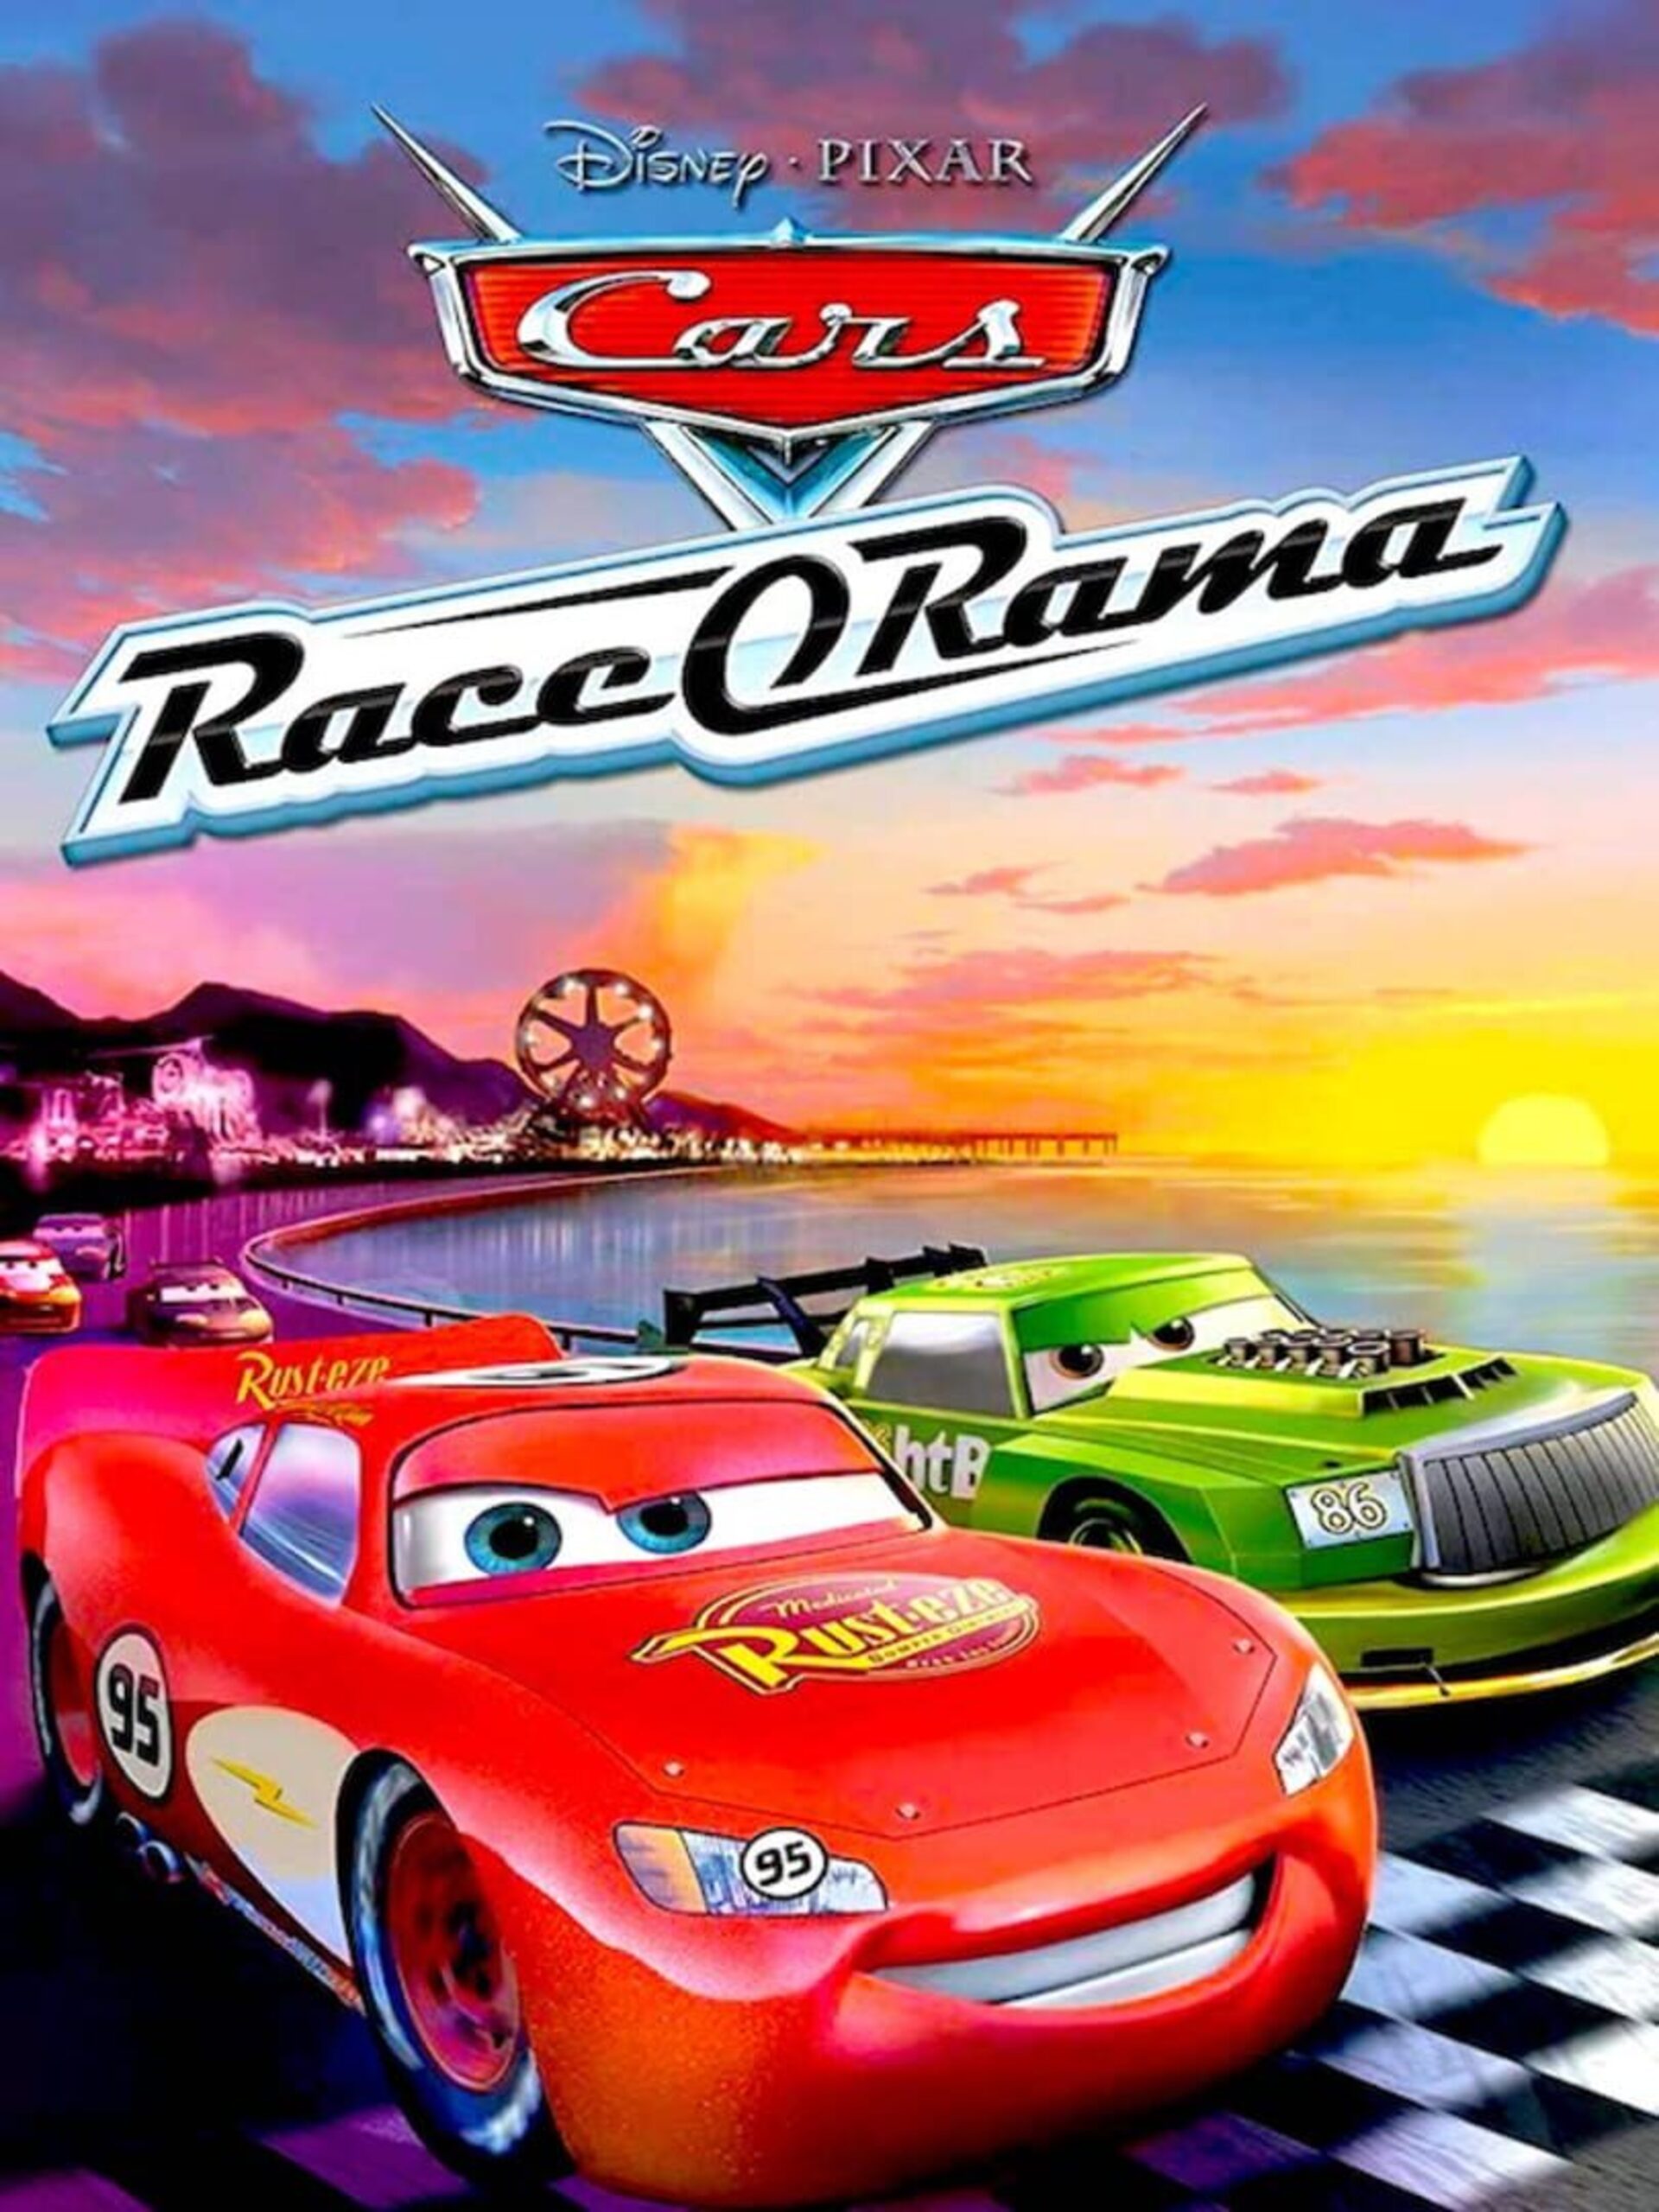 Xbox Cars Race-O-Rama Video Games